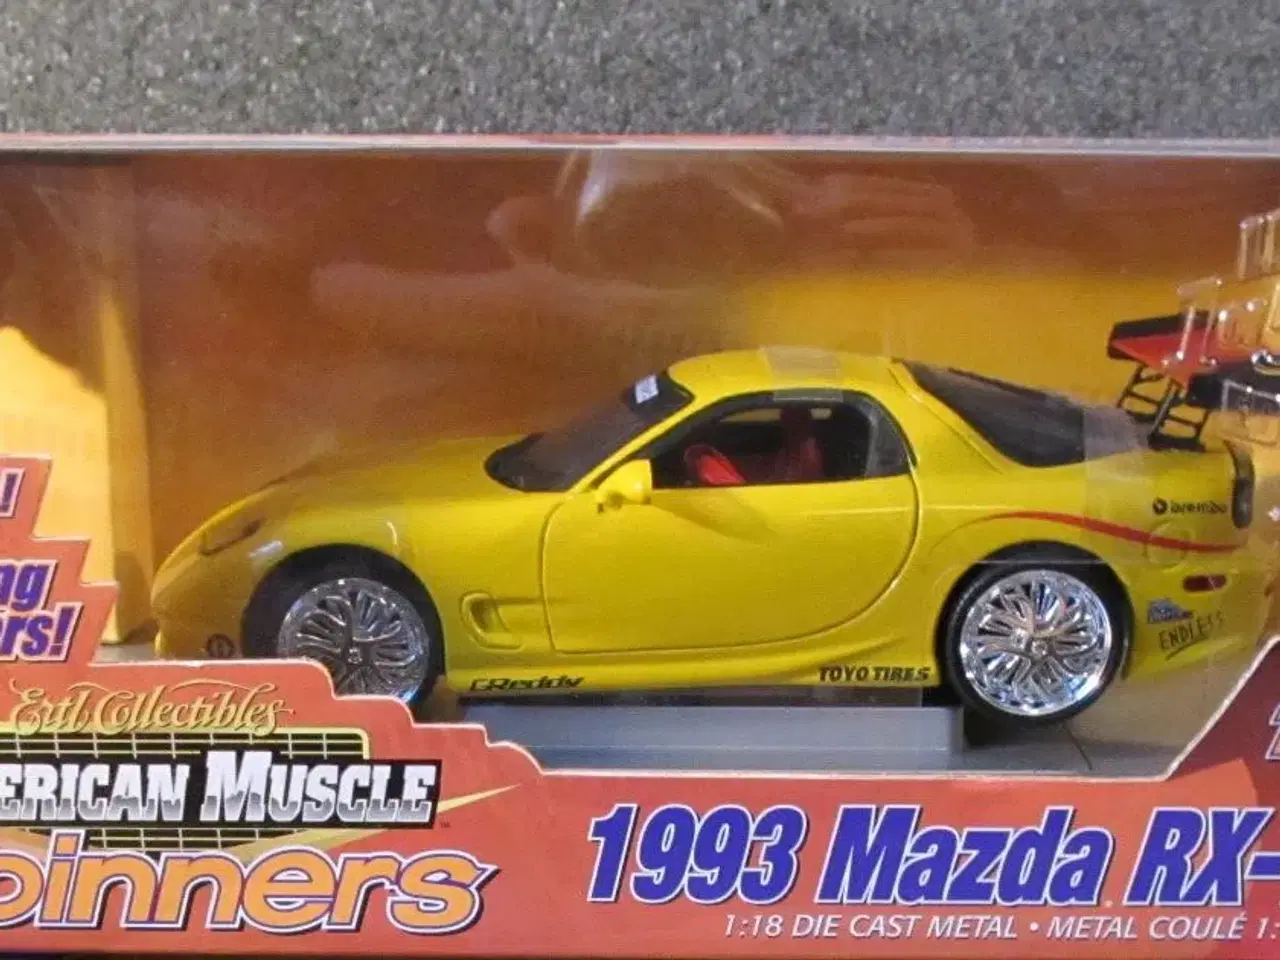 Billede 5 - 1993 Mazda RX-7 Spinners - 1:18